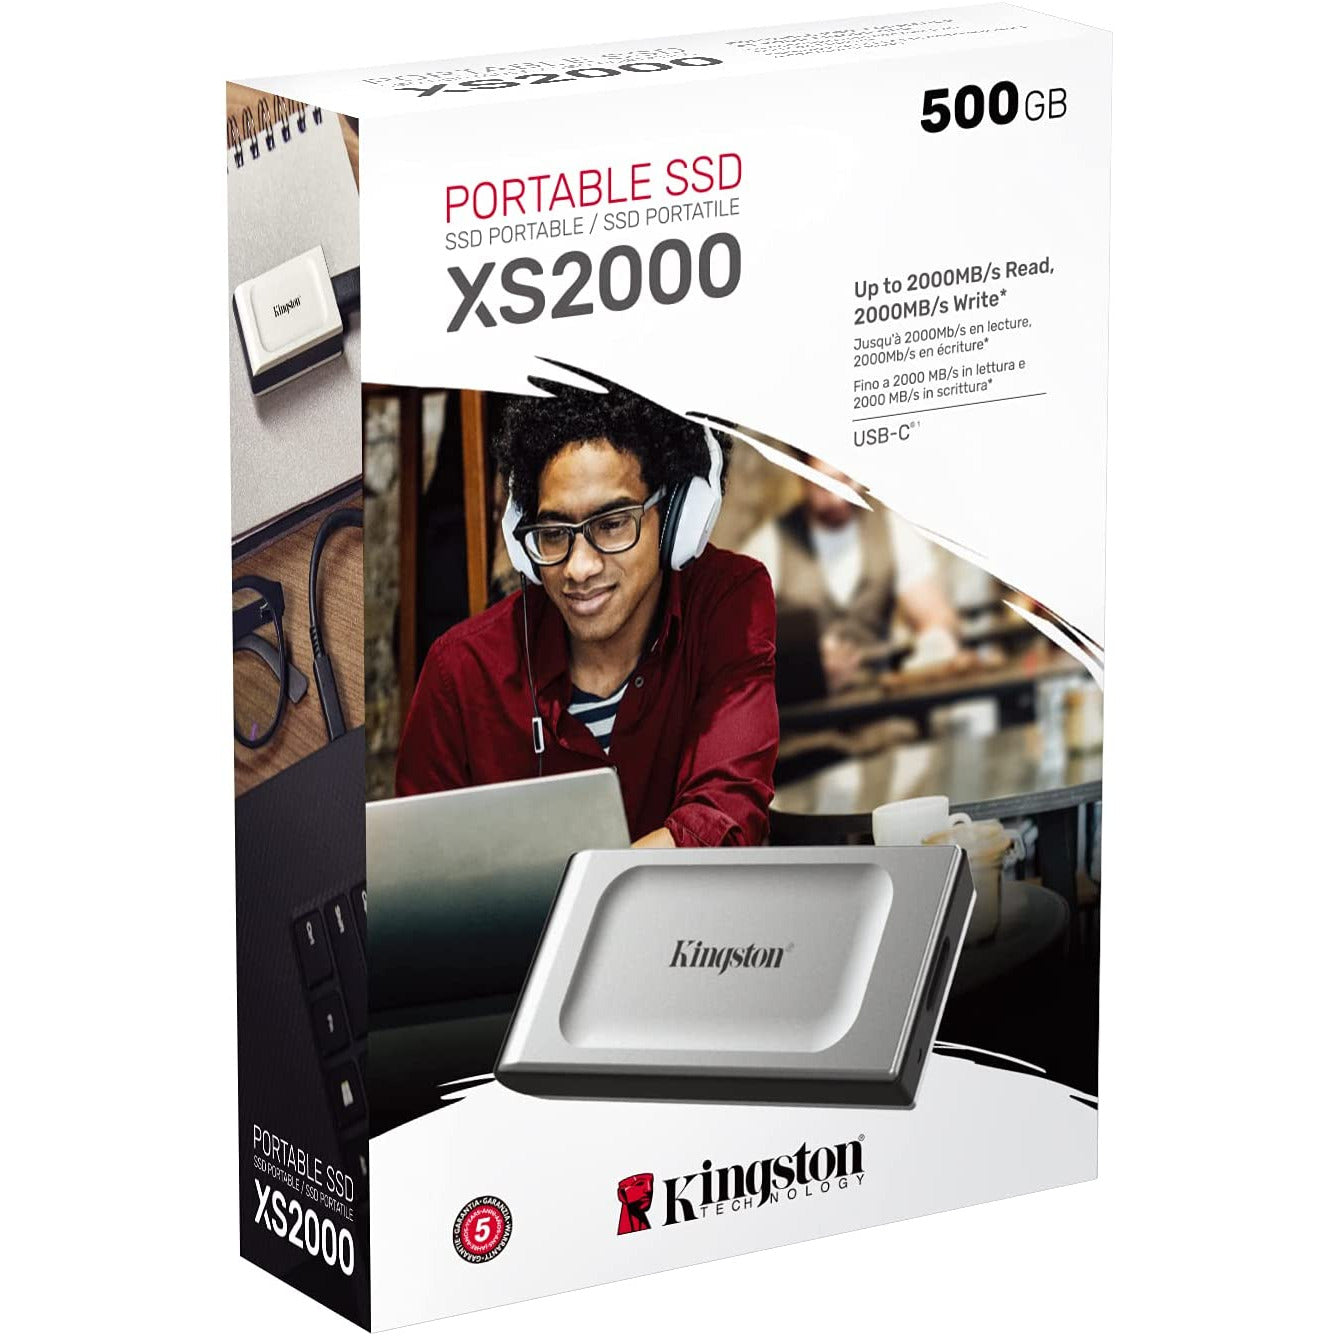 Kingston XS2000 500GB High Performance Pocket-Sized External SSD USB C